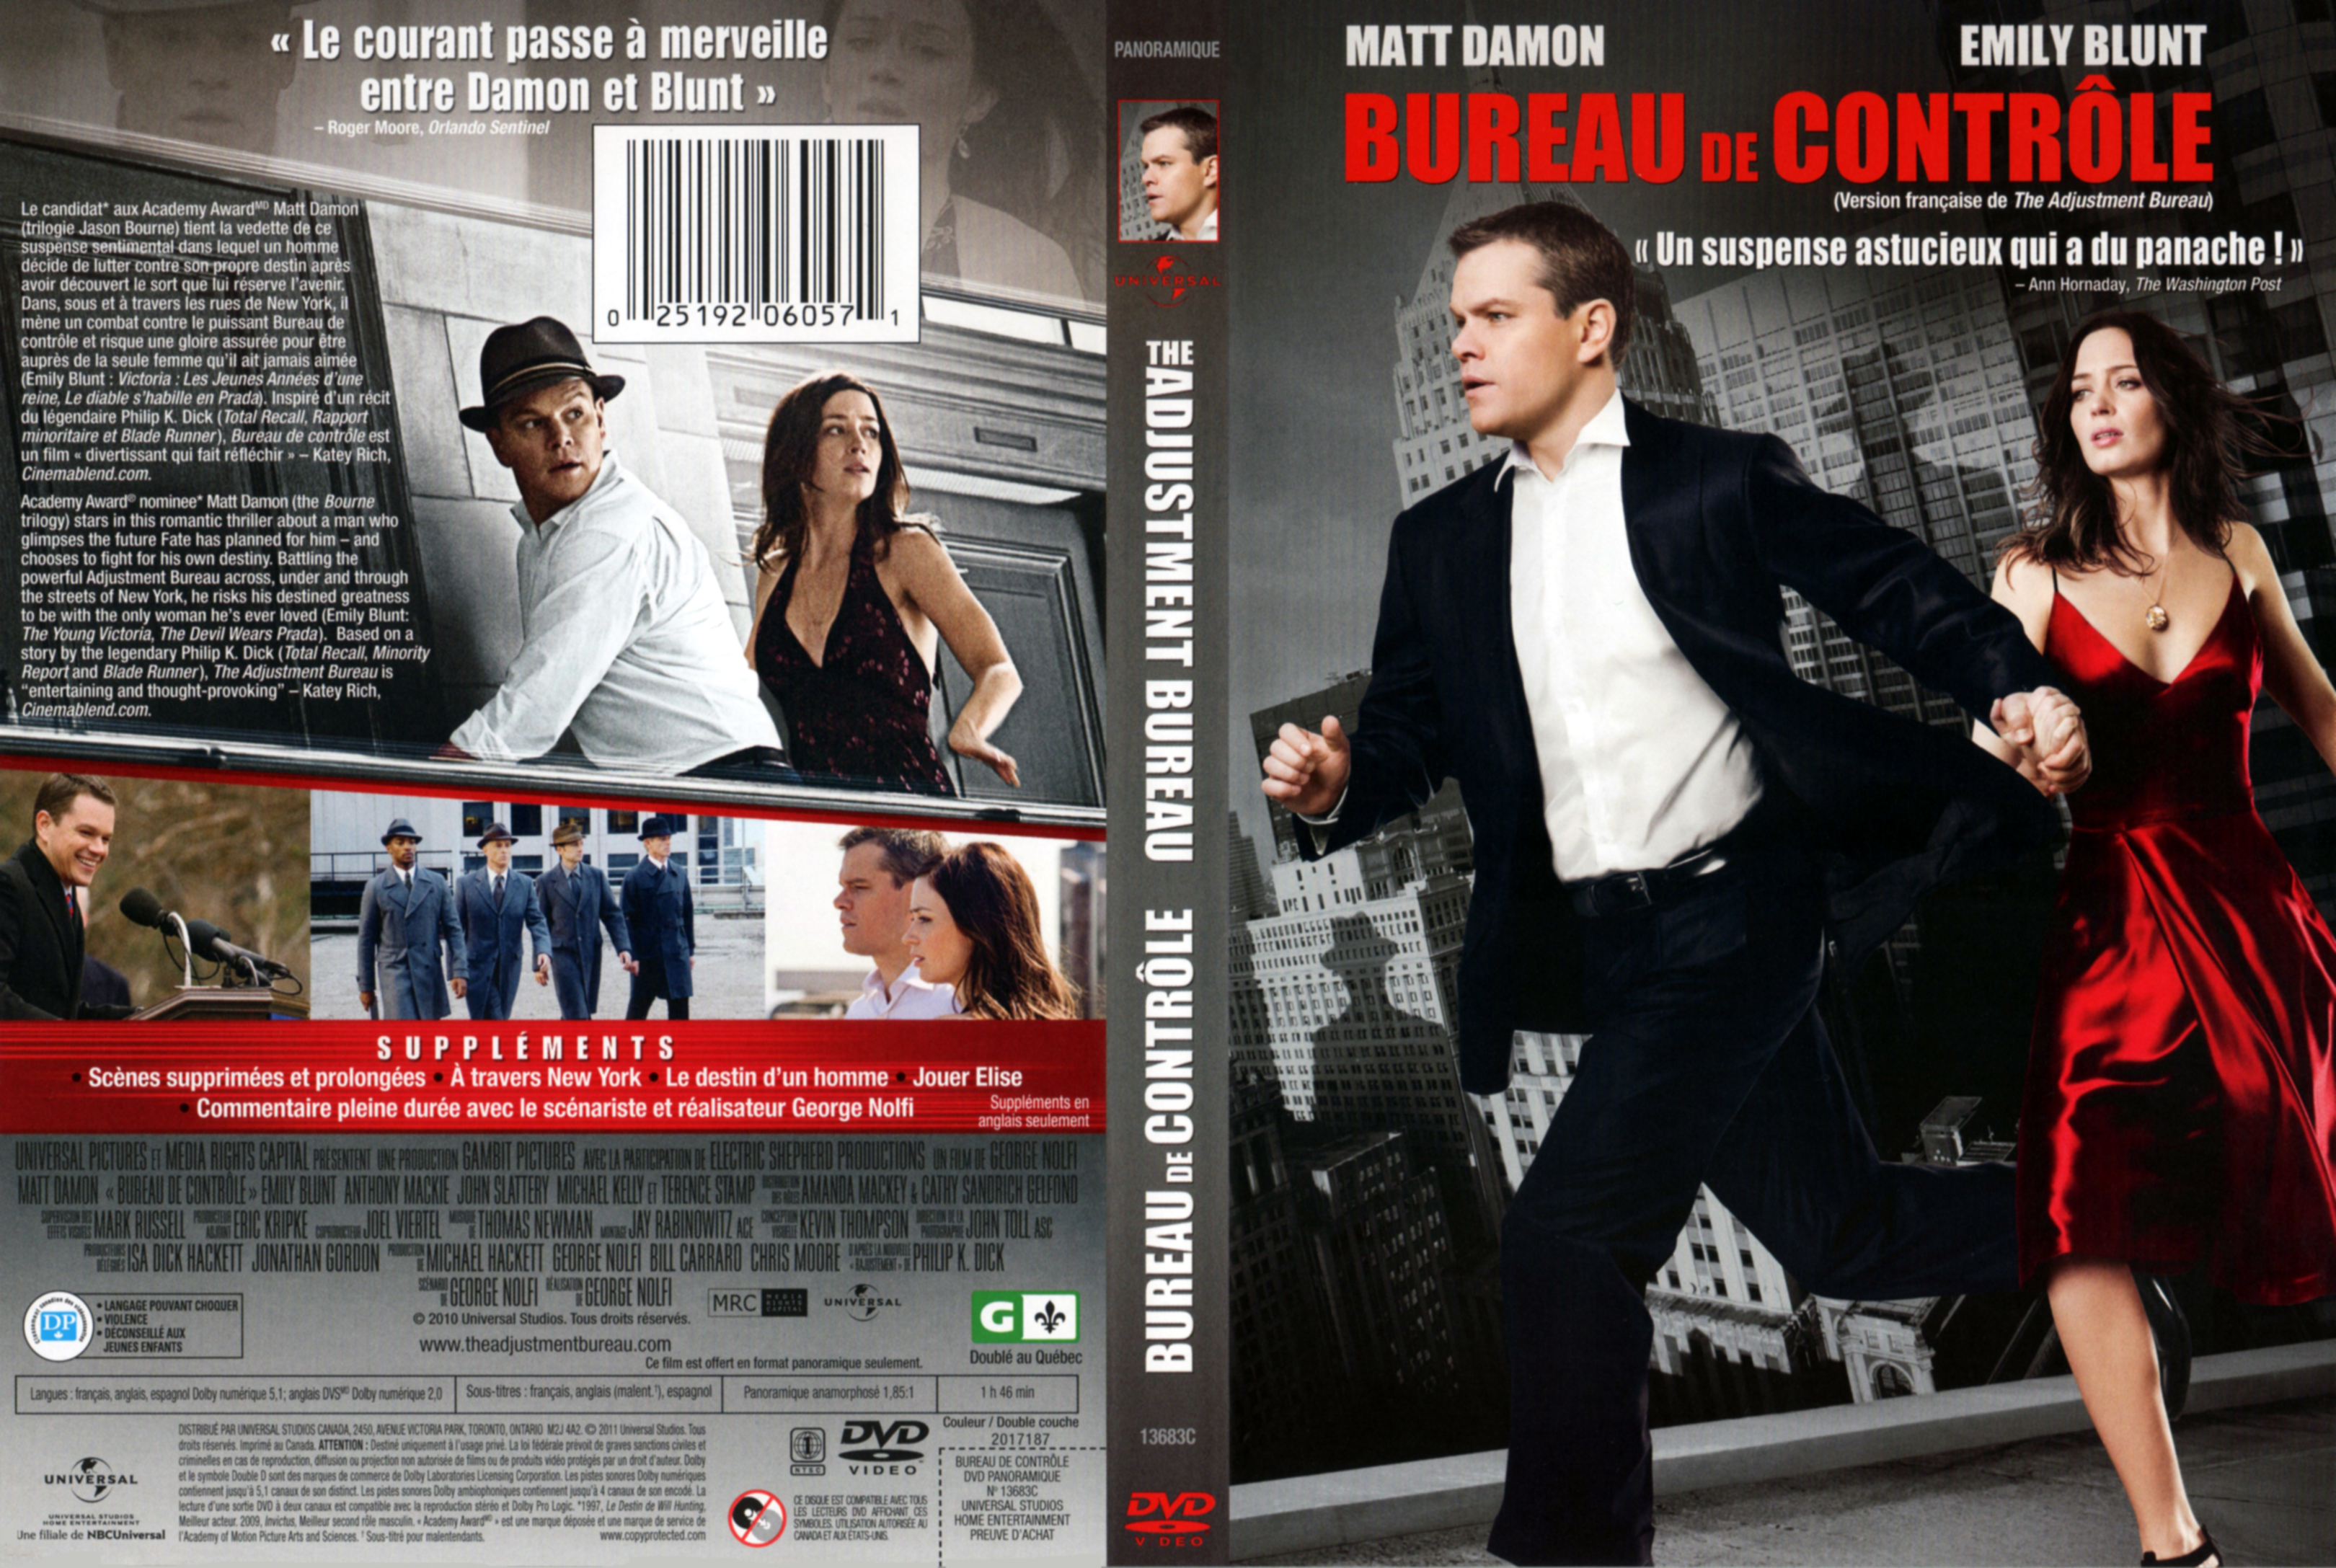 Jaquette DVD Bureau de controle (Canadienne)